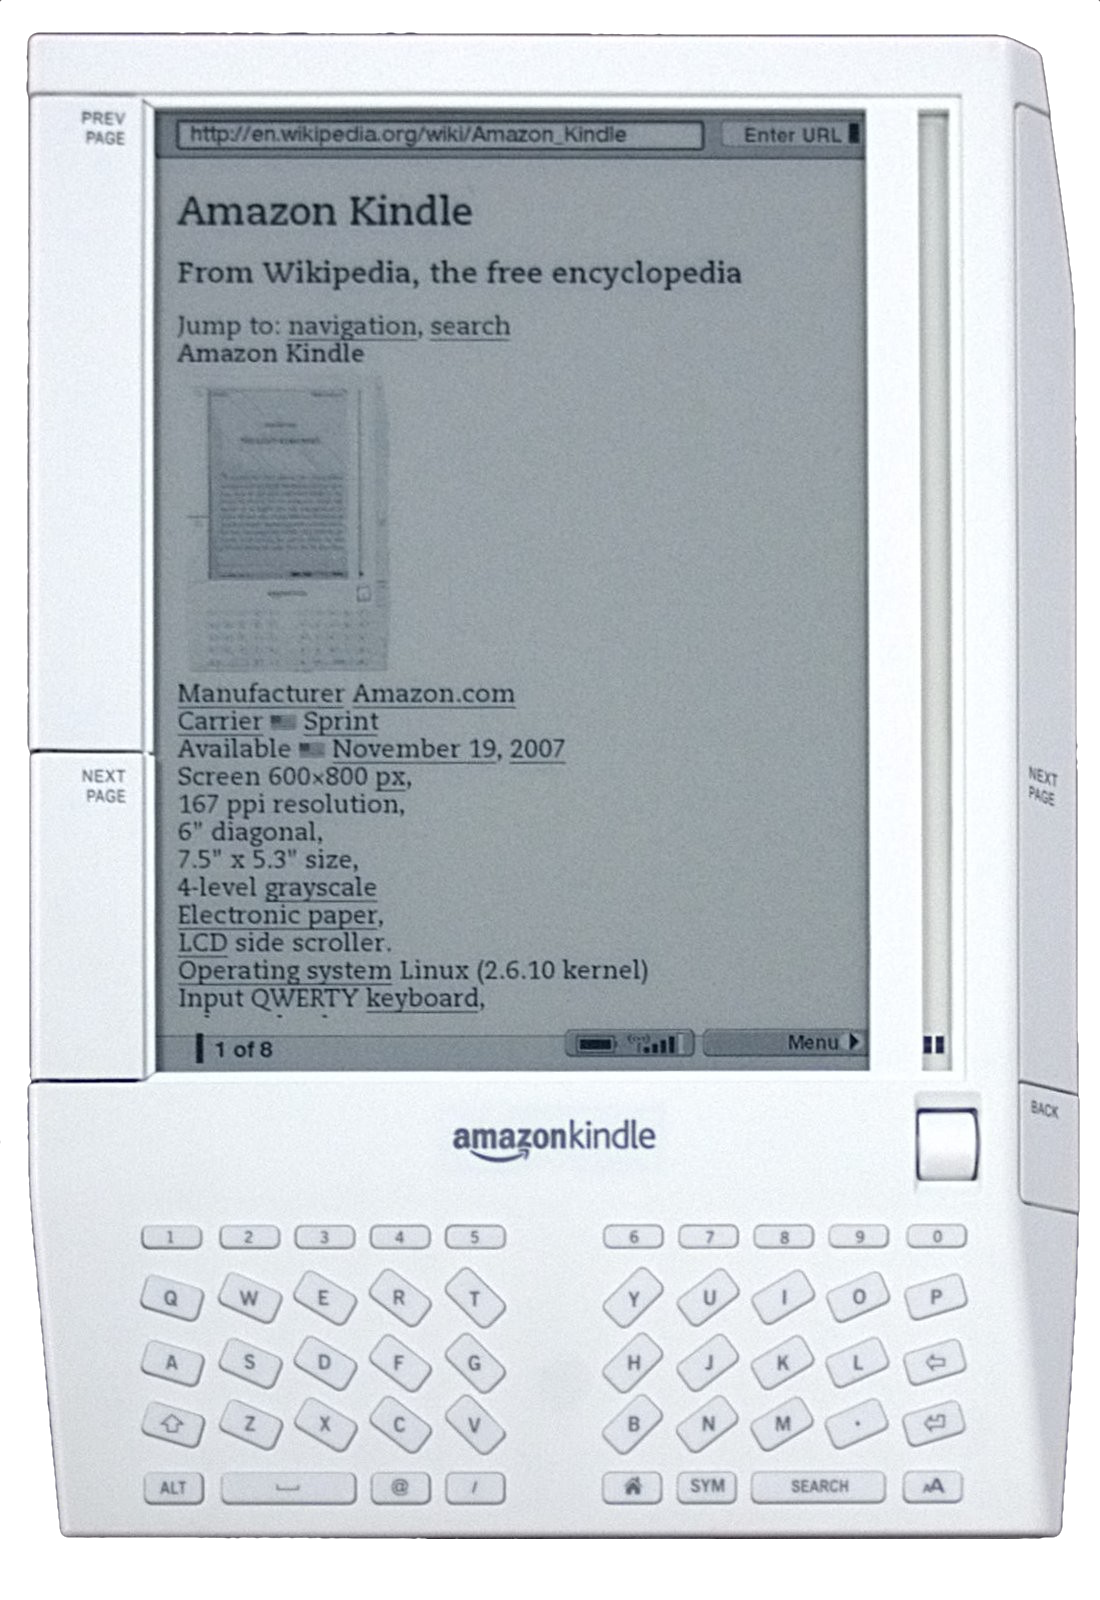 The first Amazon Kindle. Image by Jon Davis via [Wikimedia](https://en.wikipedia.org/wiki/Amazon_Kindle#/media/File:Amazon_Kindle_-_Wikipedia.jpg).